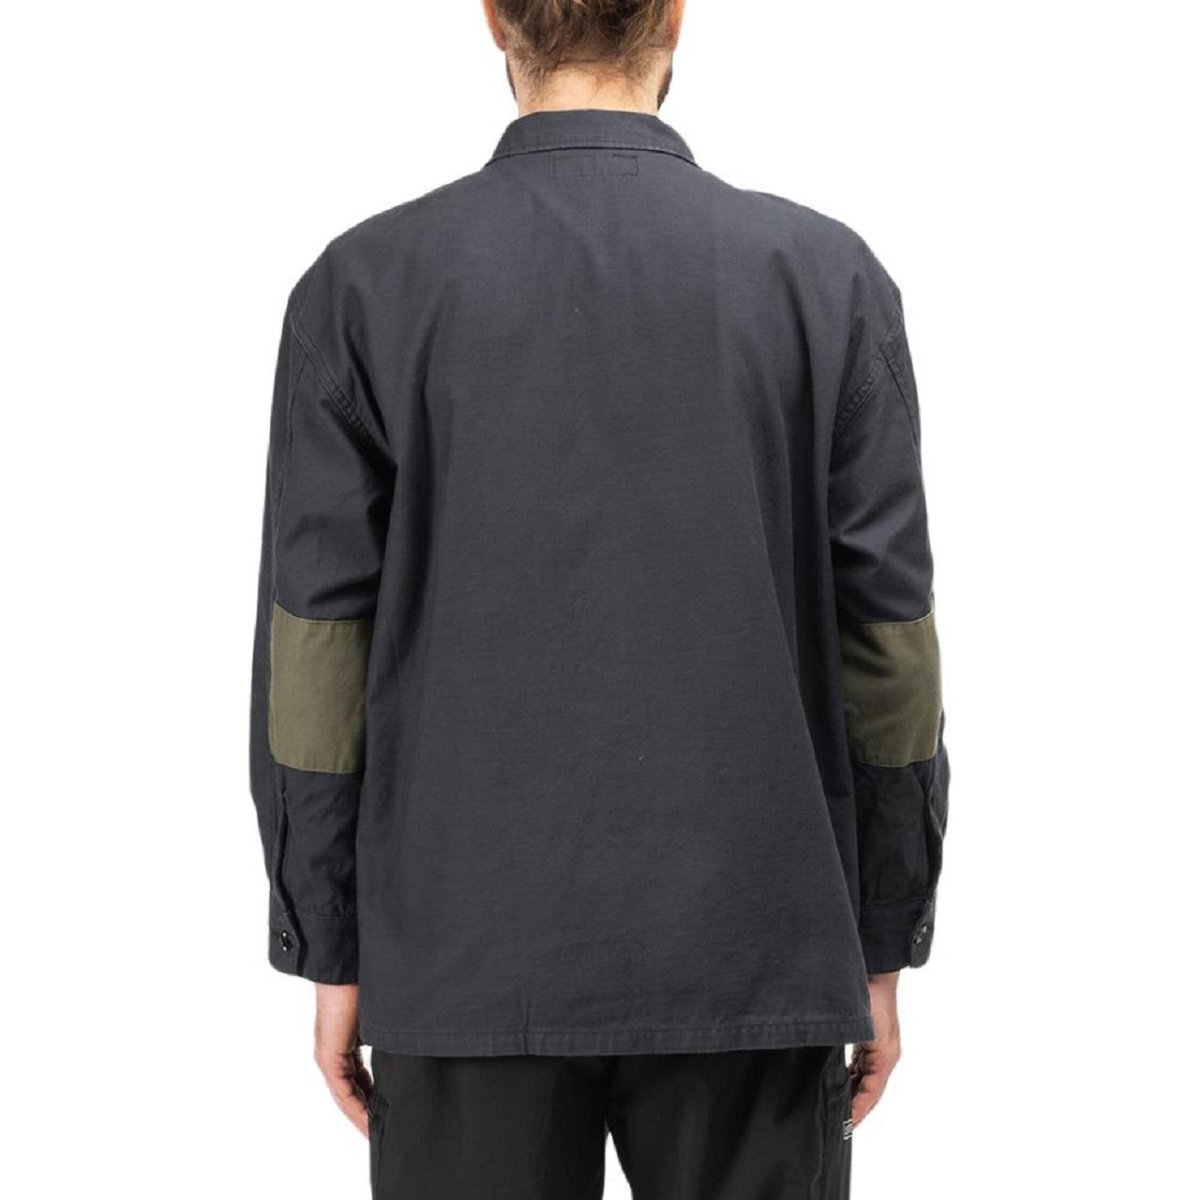 Neighborhood Combat LS Shirt (Black / Olive) 202SINH-SHM01 